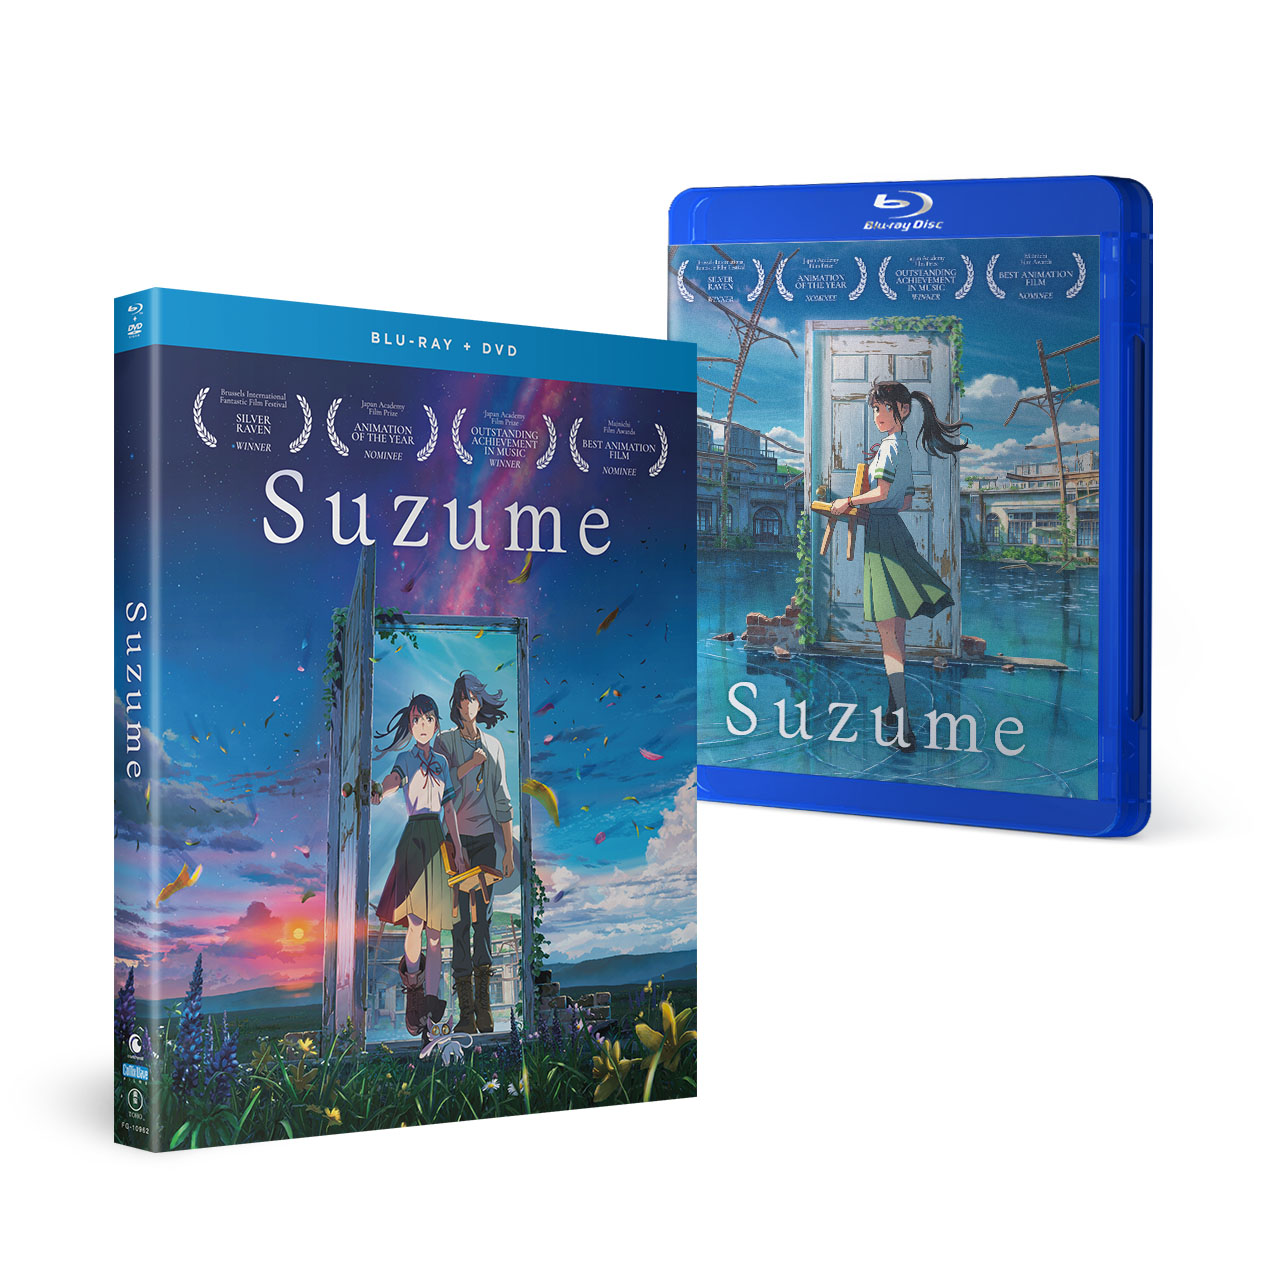 Suzume - Movie - Blu-ray + DVD image count 1